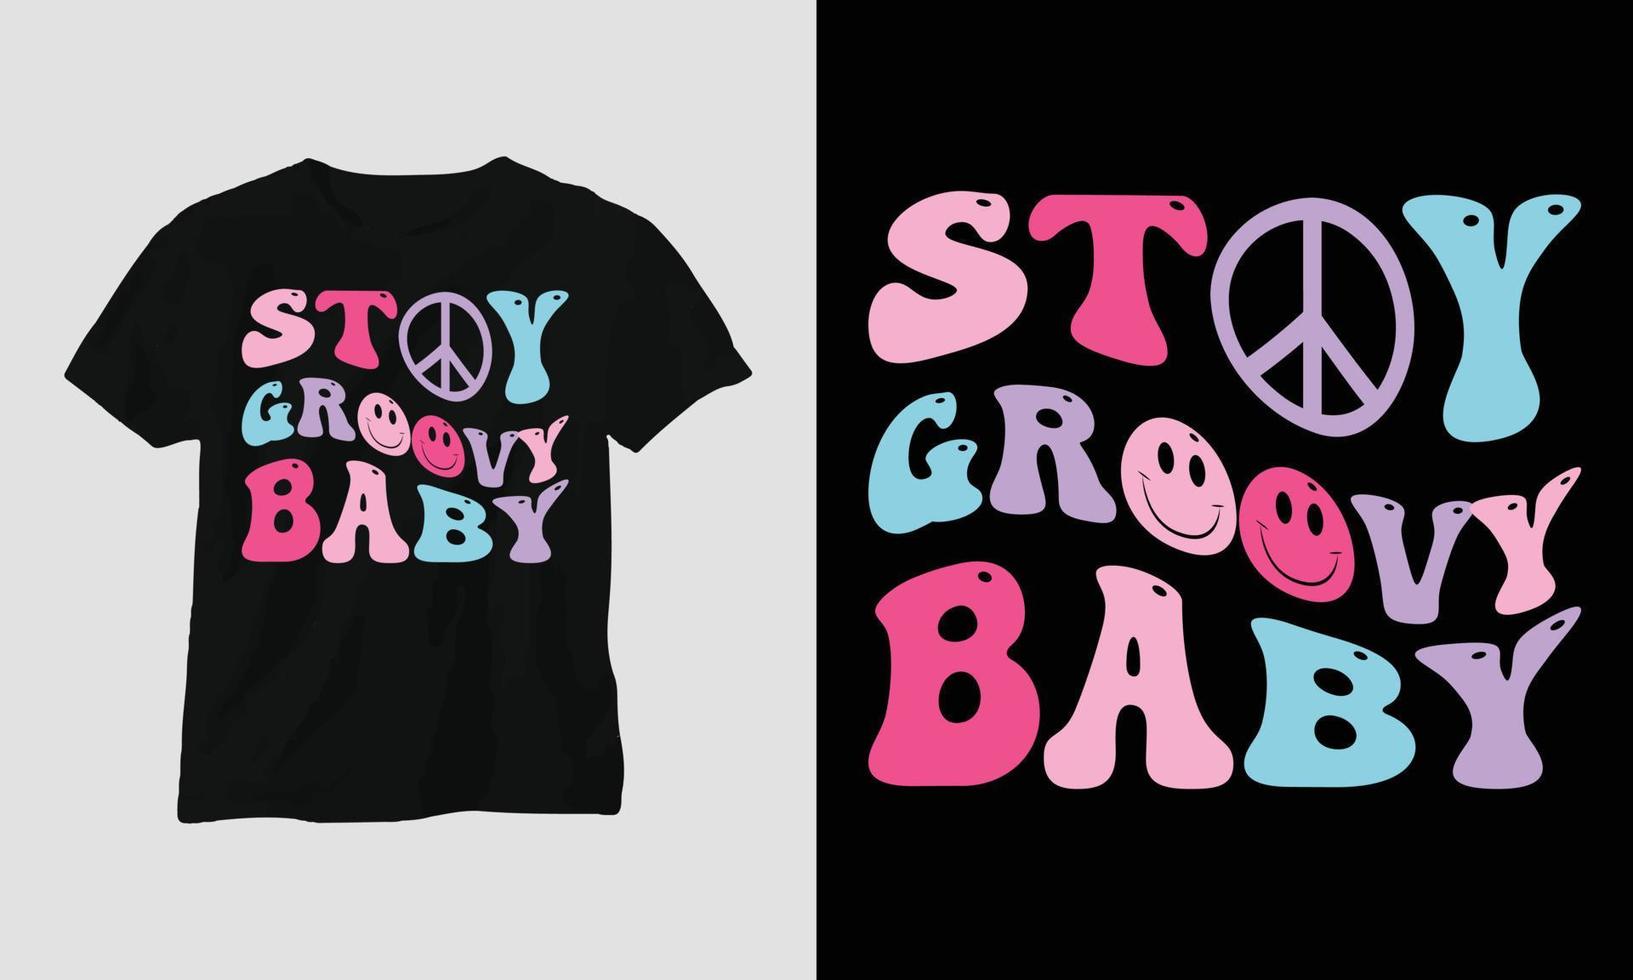 Wavy Retro Groovy T-shirt Design stay groovy baby vector